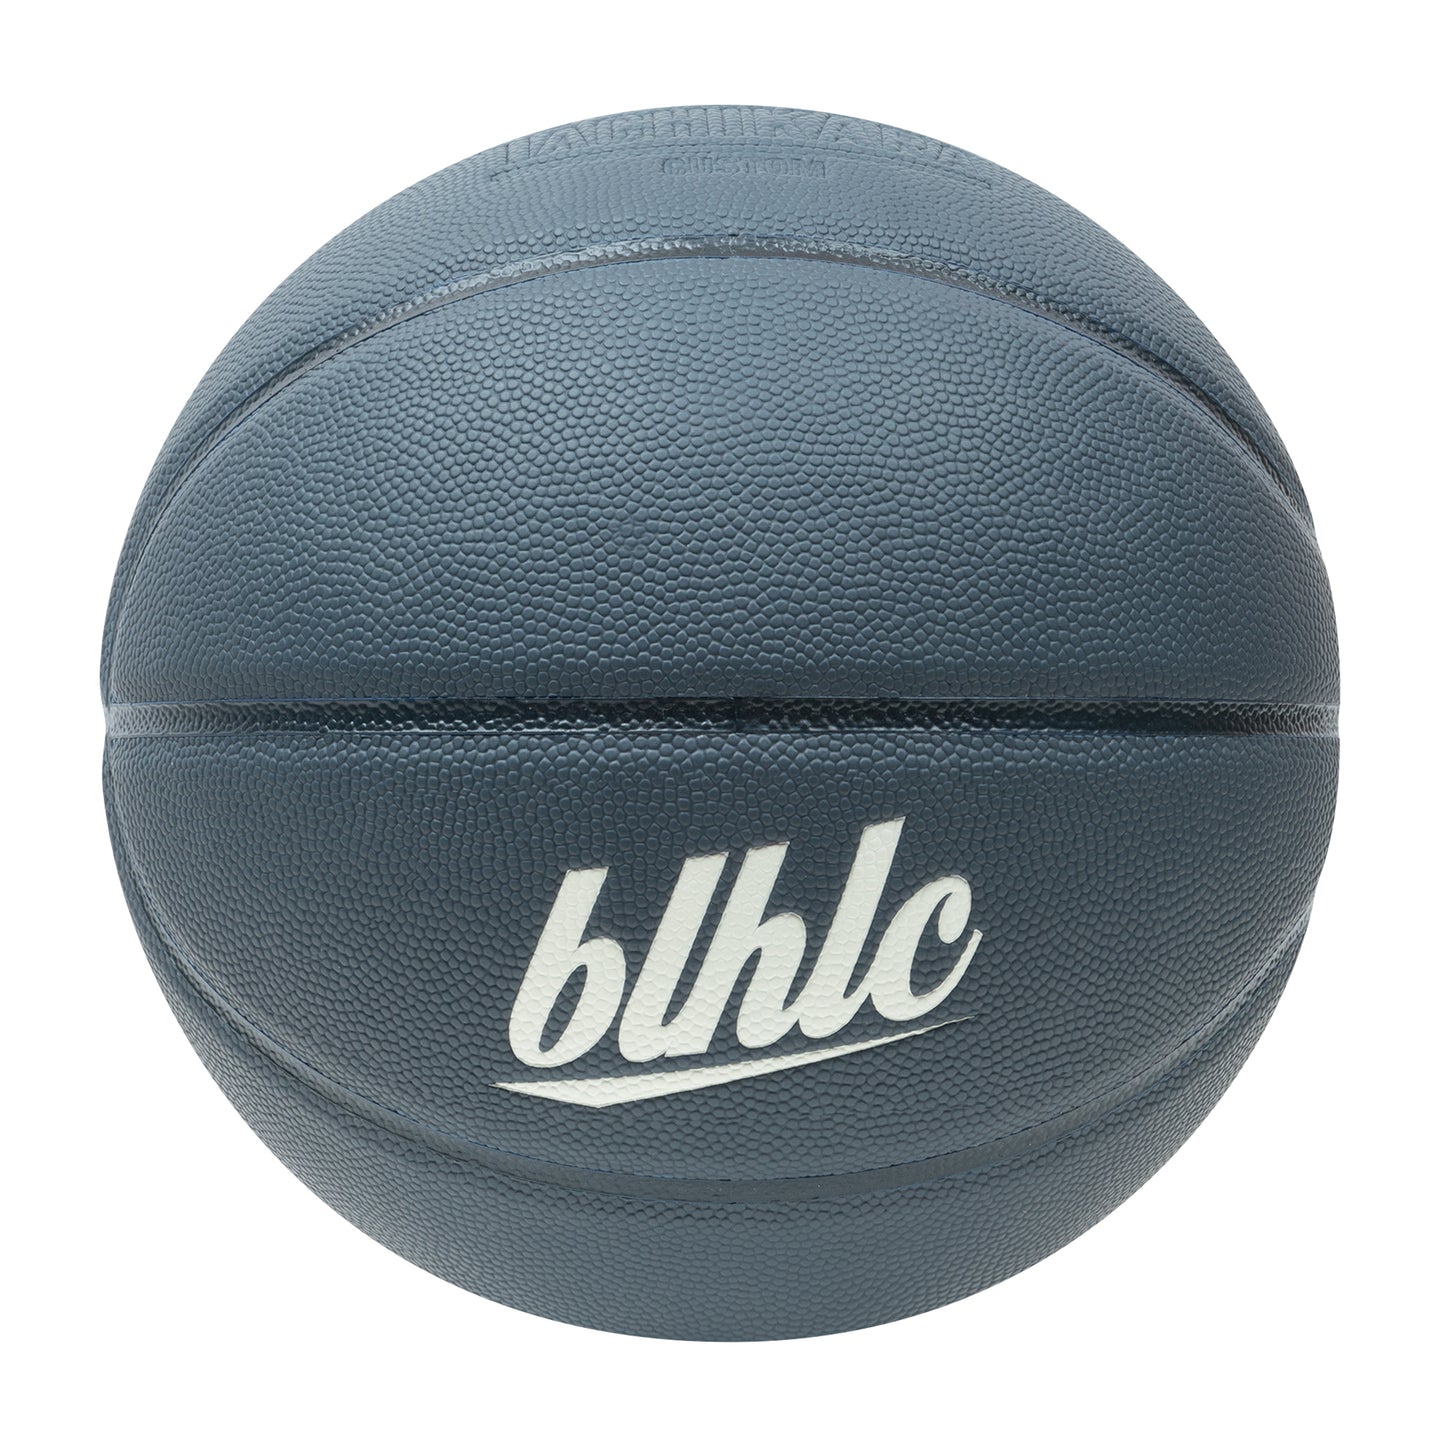 Playground Basketball / ballaholic x TACHIKARA(slate blue/dark navy/white)